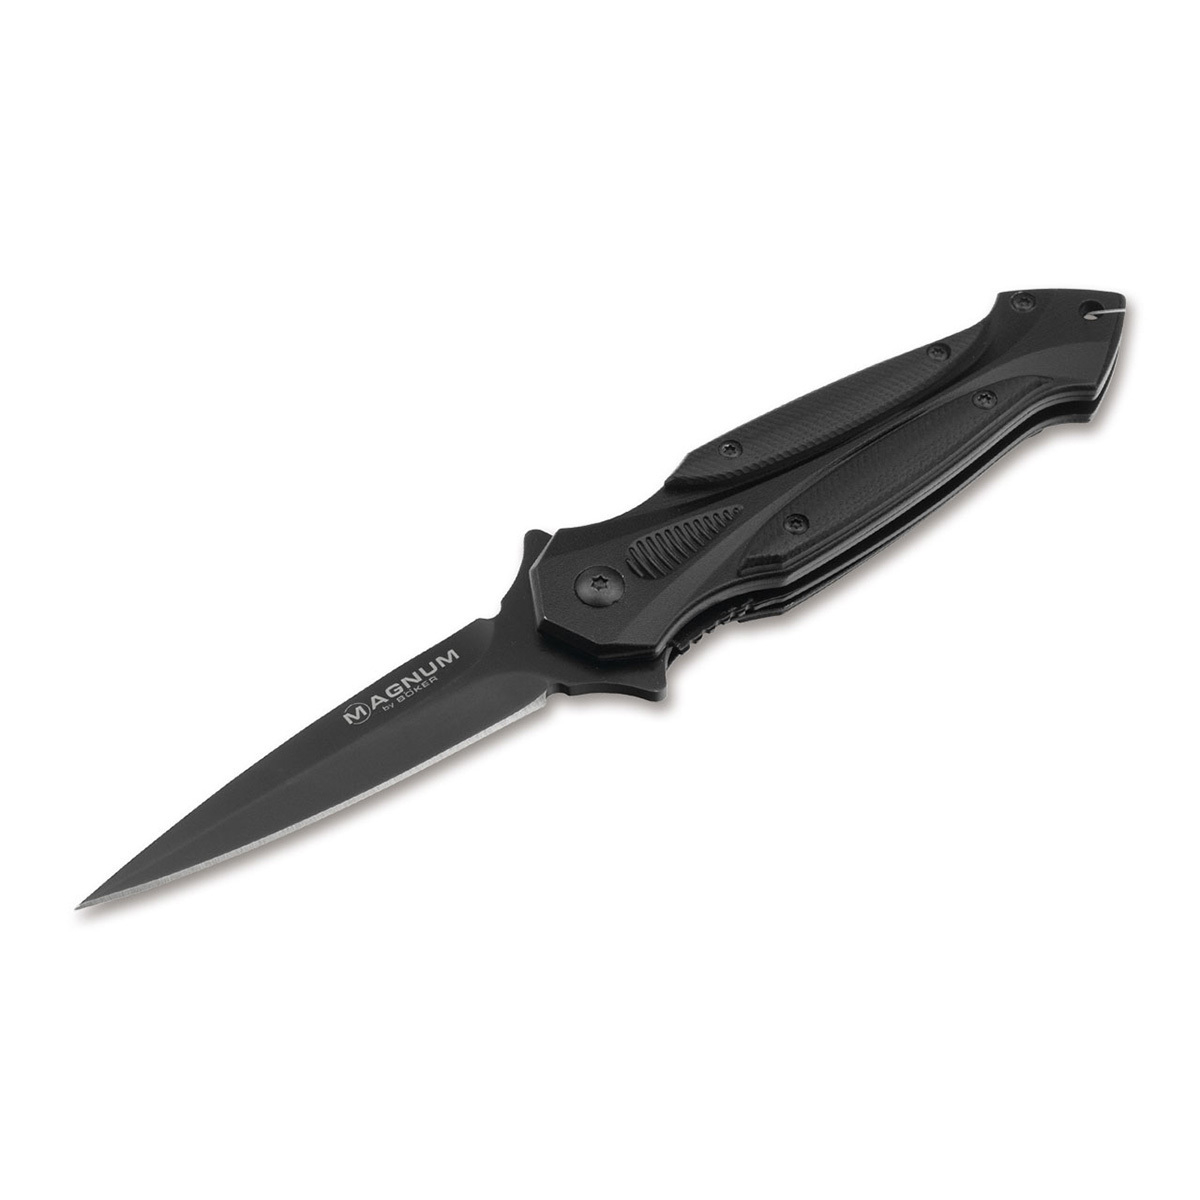 Полуавтоматический складной нож Boker Starfighter 2.0, сталь 440А, рукоять G-10 полуавтоматический складной нож ontario utilitac assisted клинок satin рукоять g 10